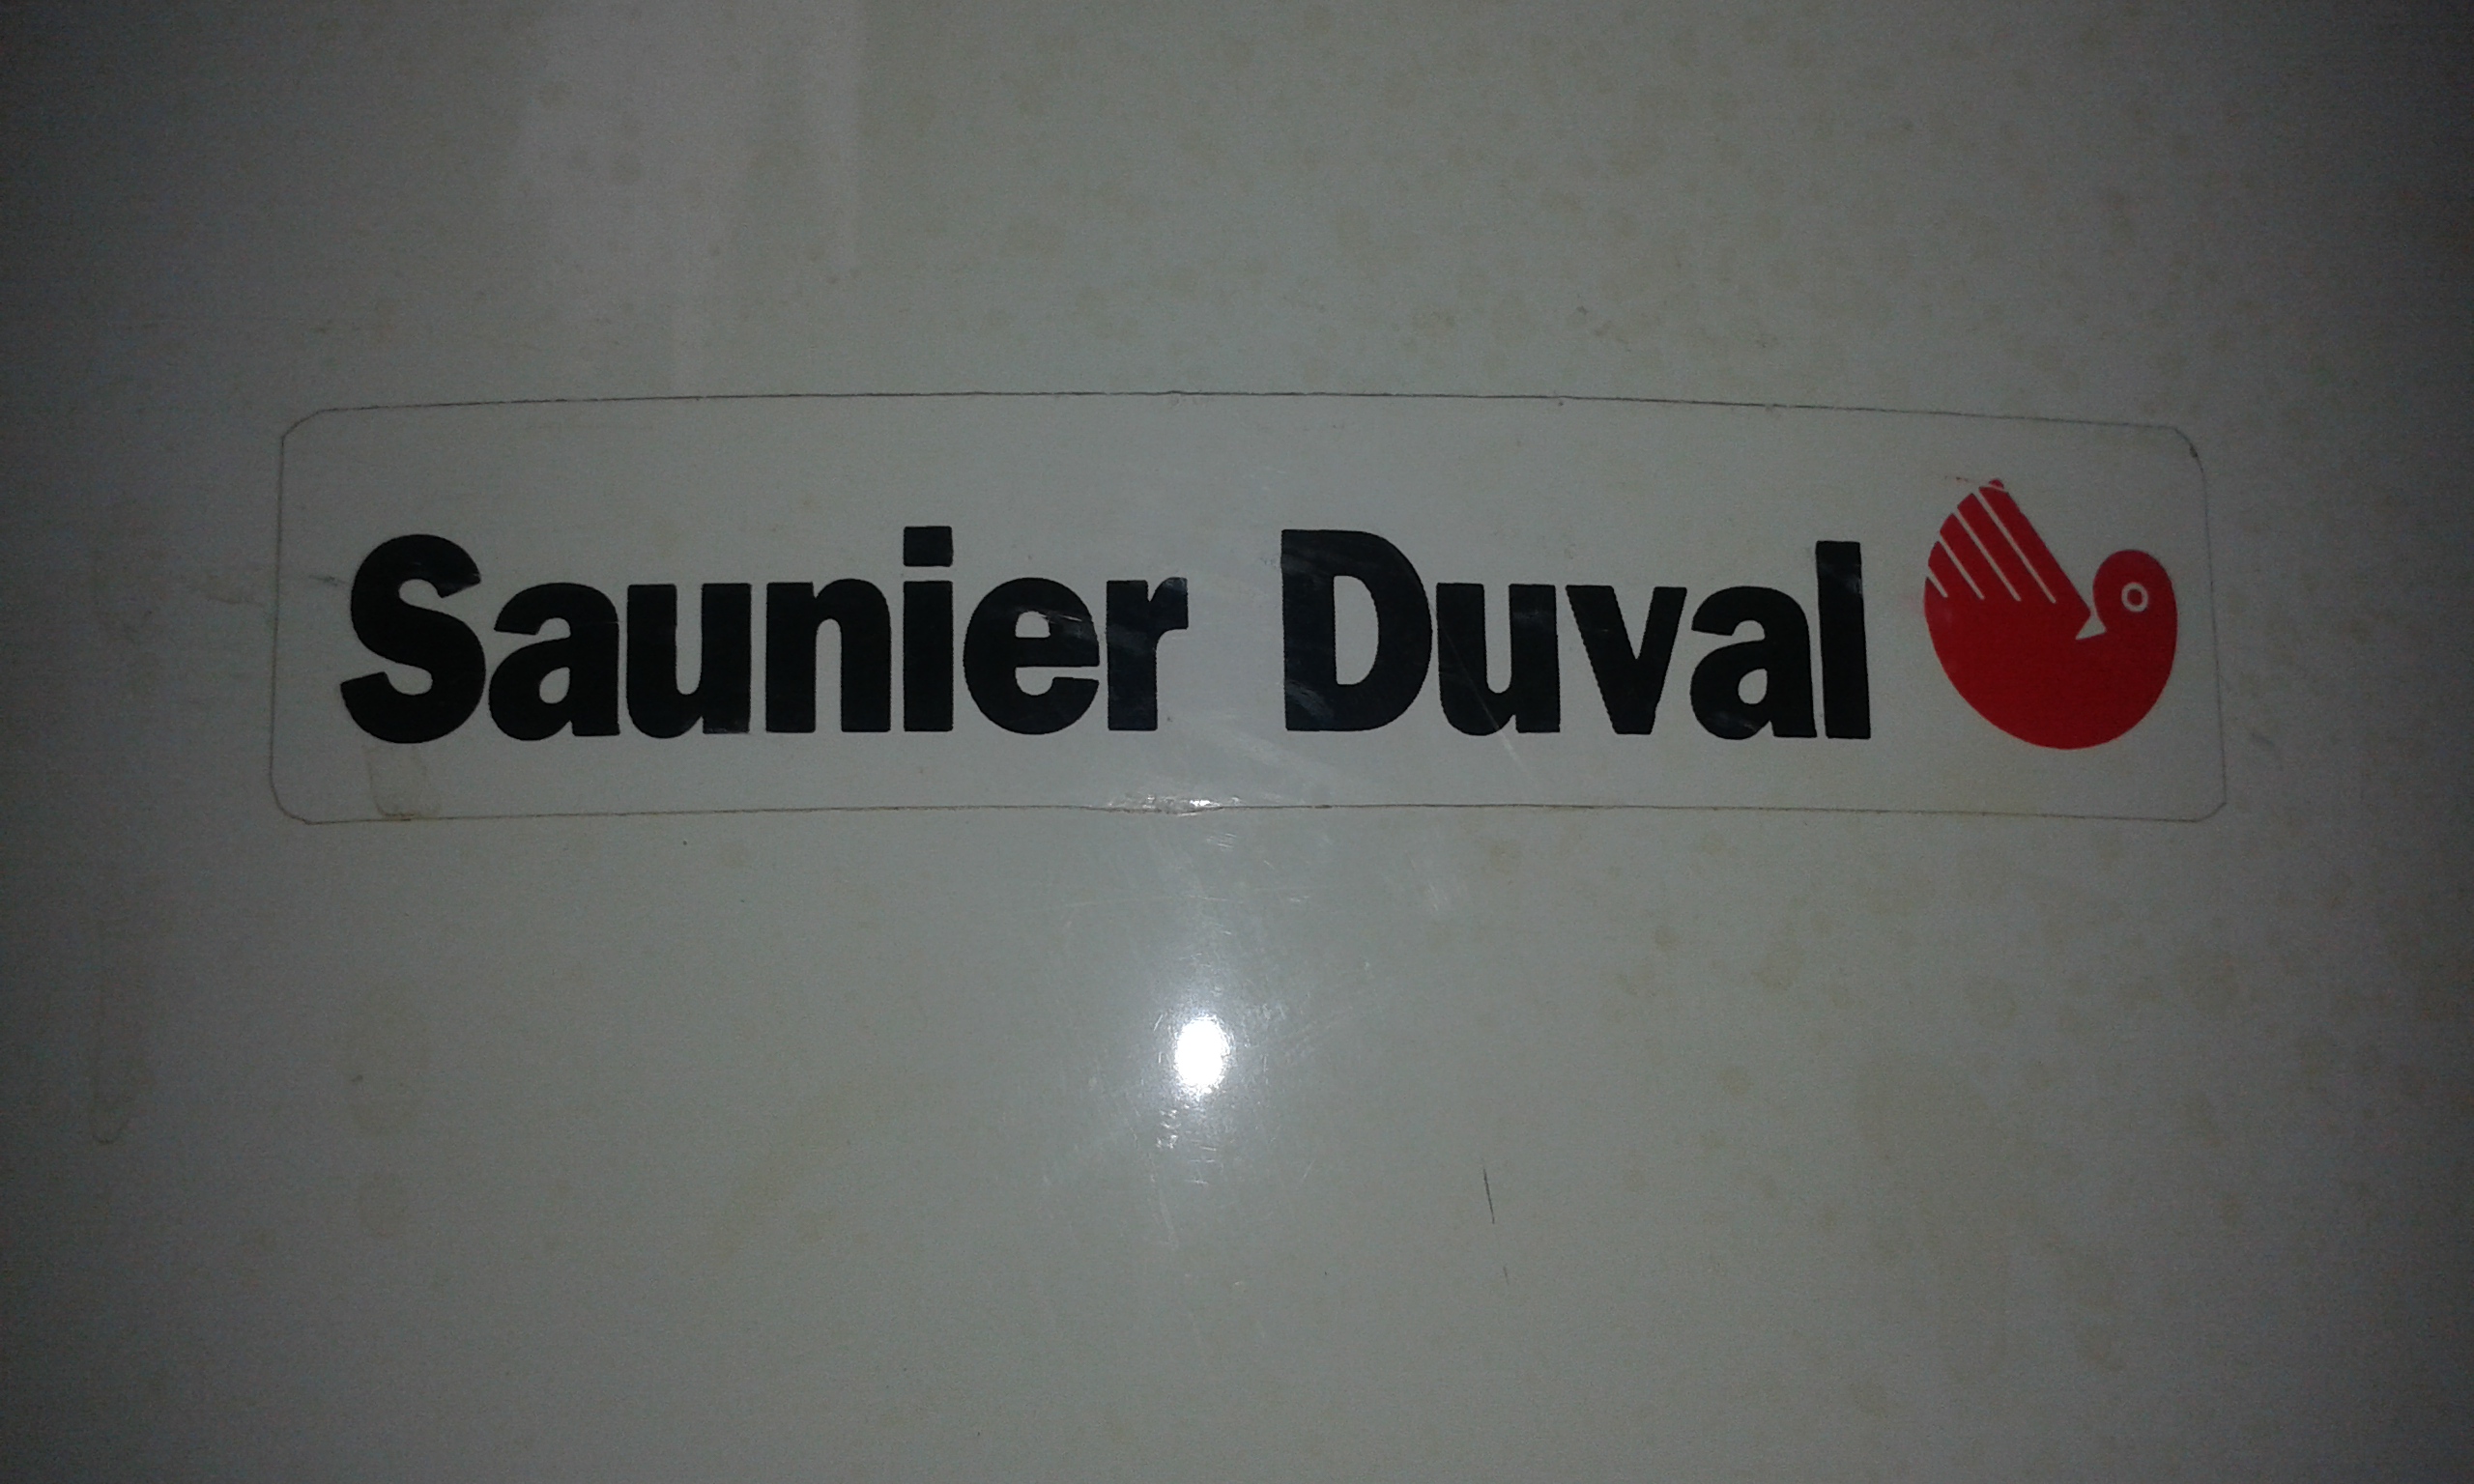 Saunier Duval bojler javítása, szervíz